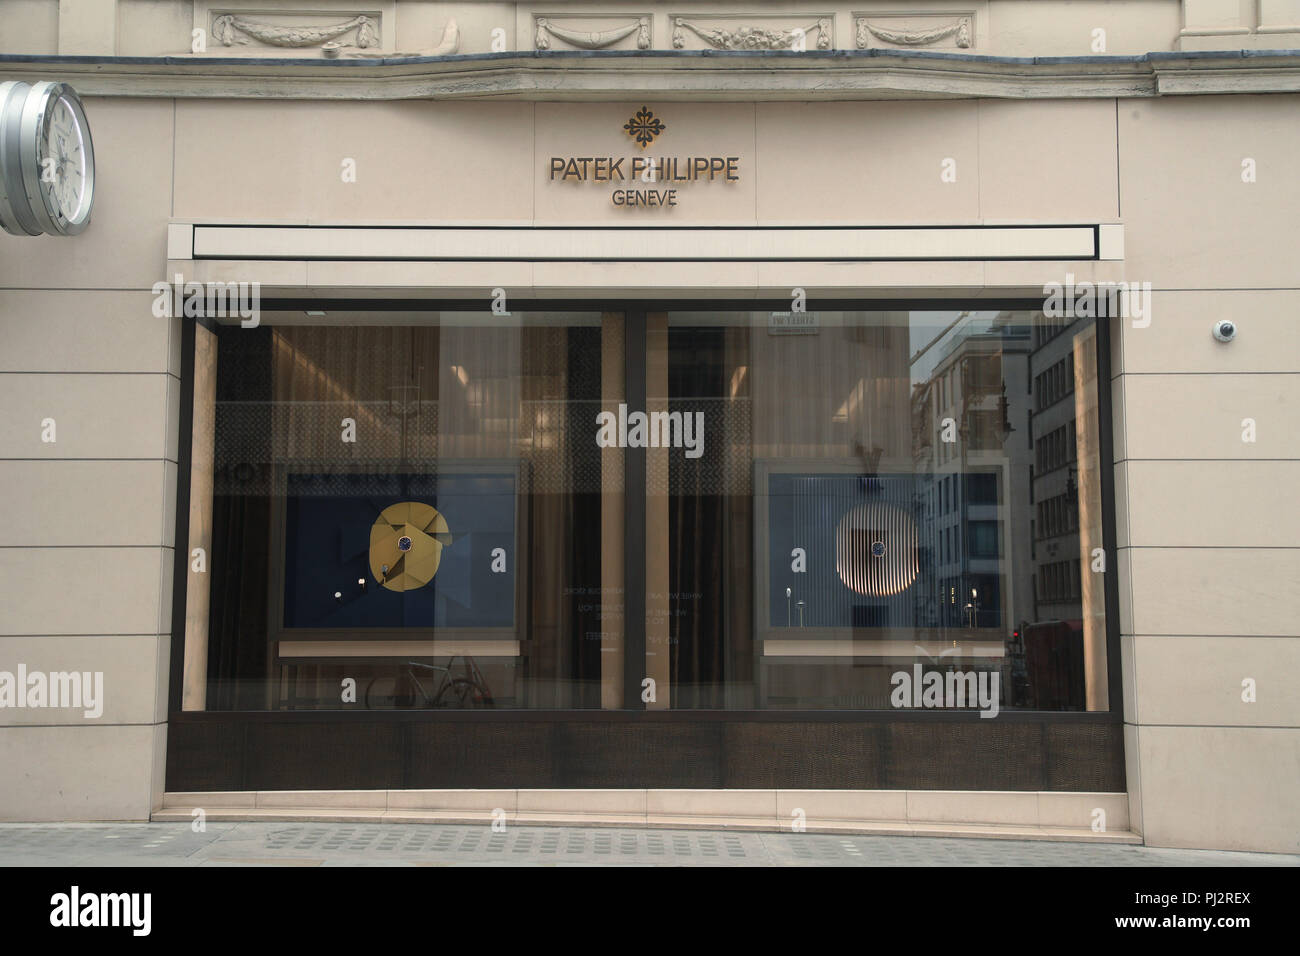 Die Patek Philippe Store auf New Bond Street, London. PRESS ASSOCIATION Foto. Bild Datum: Mittwoch, August 22, 2018. Photo Credit: Yui Mok/PA-Kabel Stockfoto